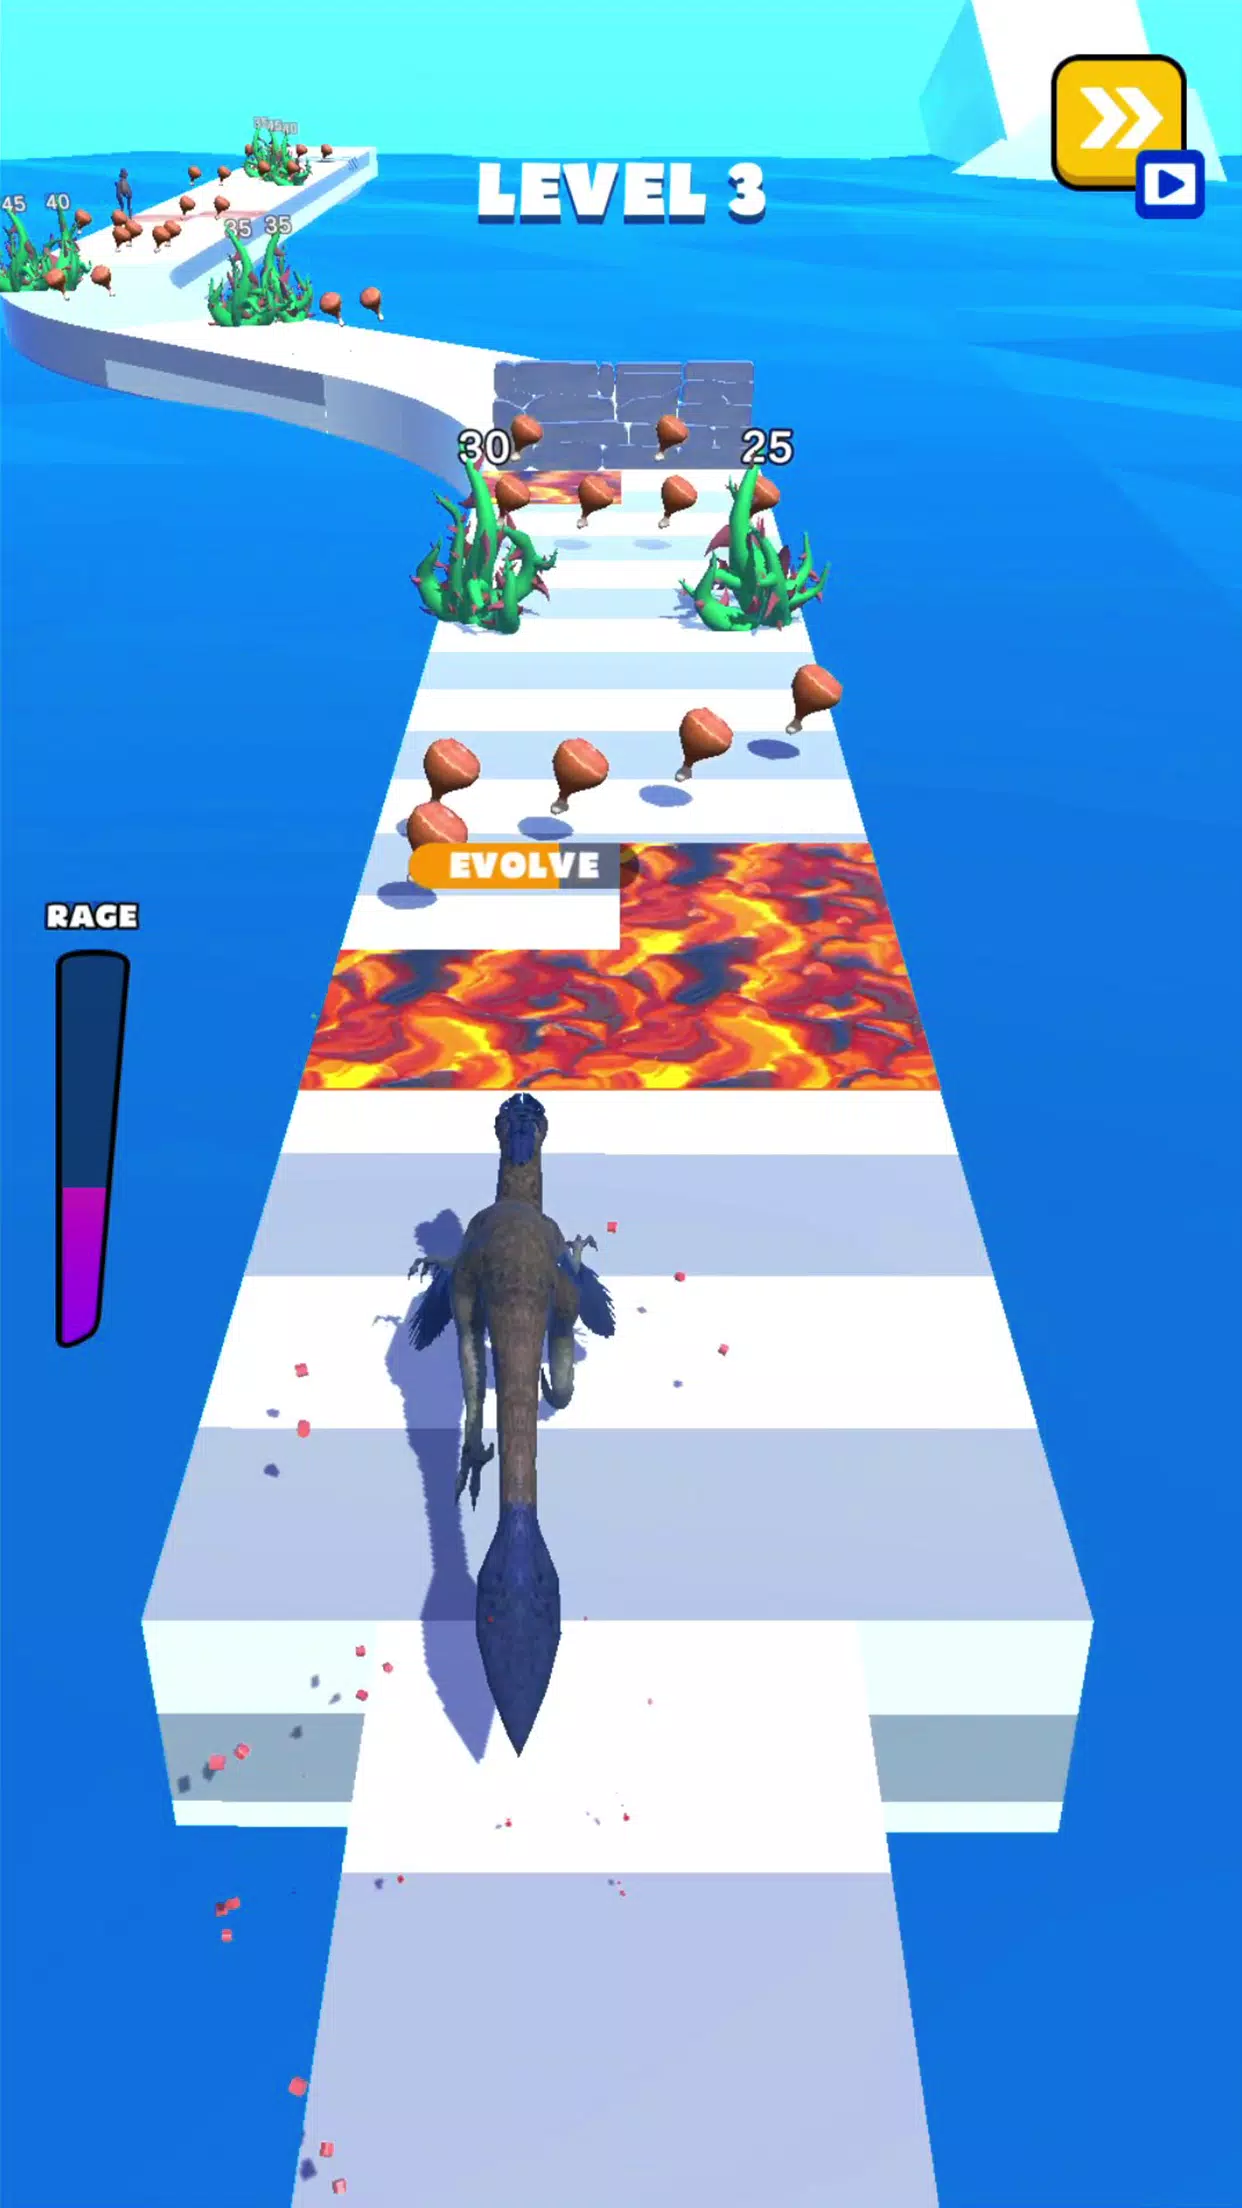 About: Run Dino Run 3 (Google Play version)